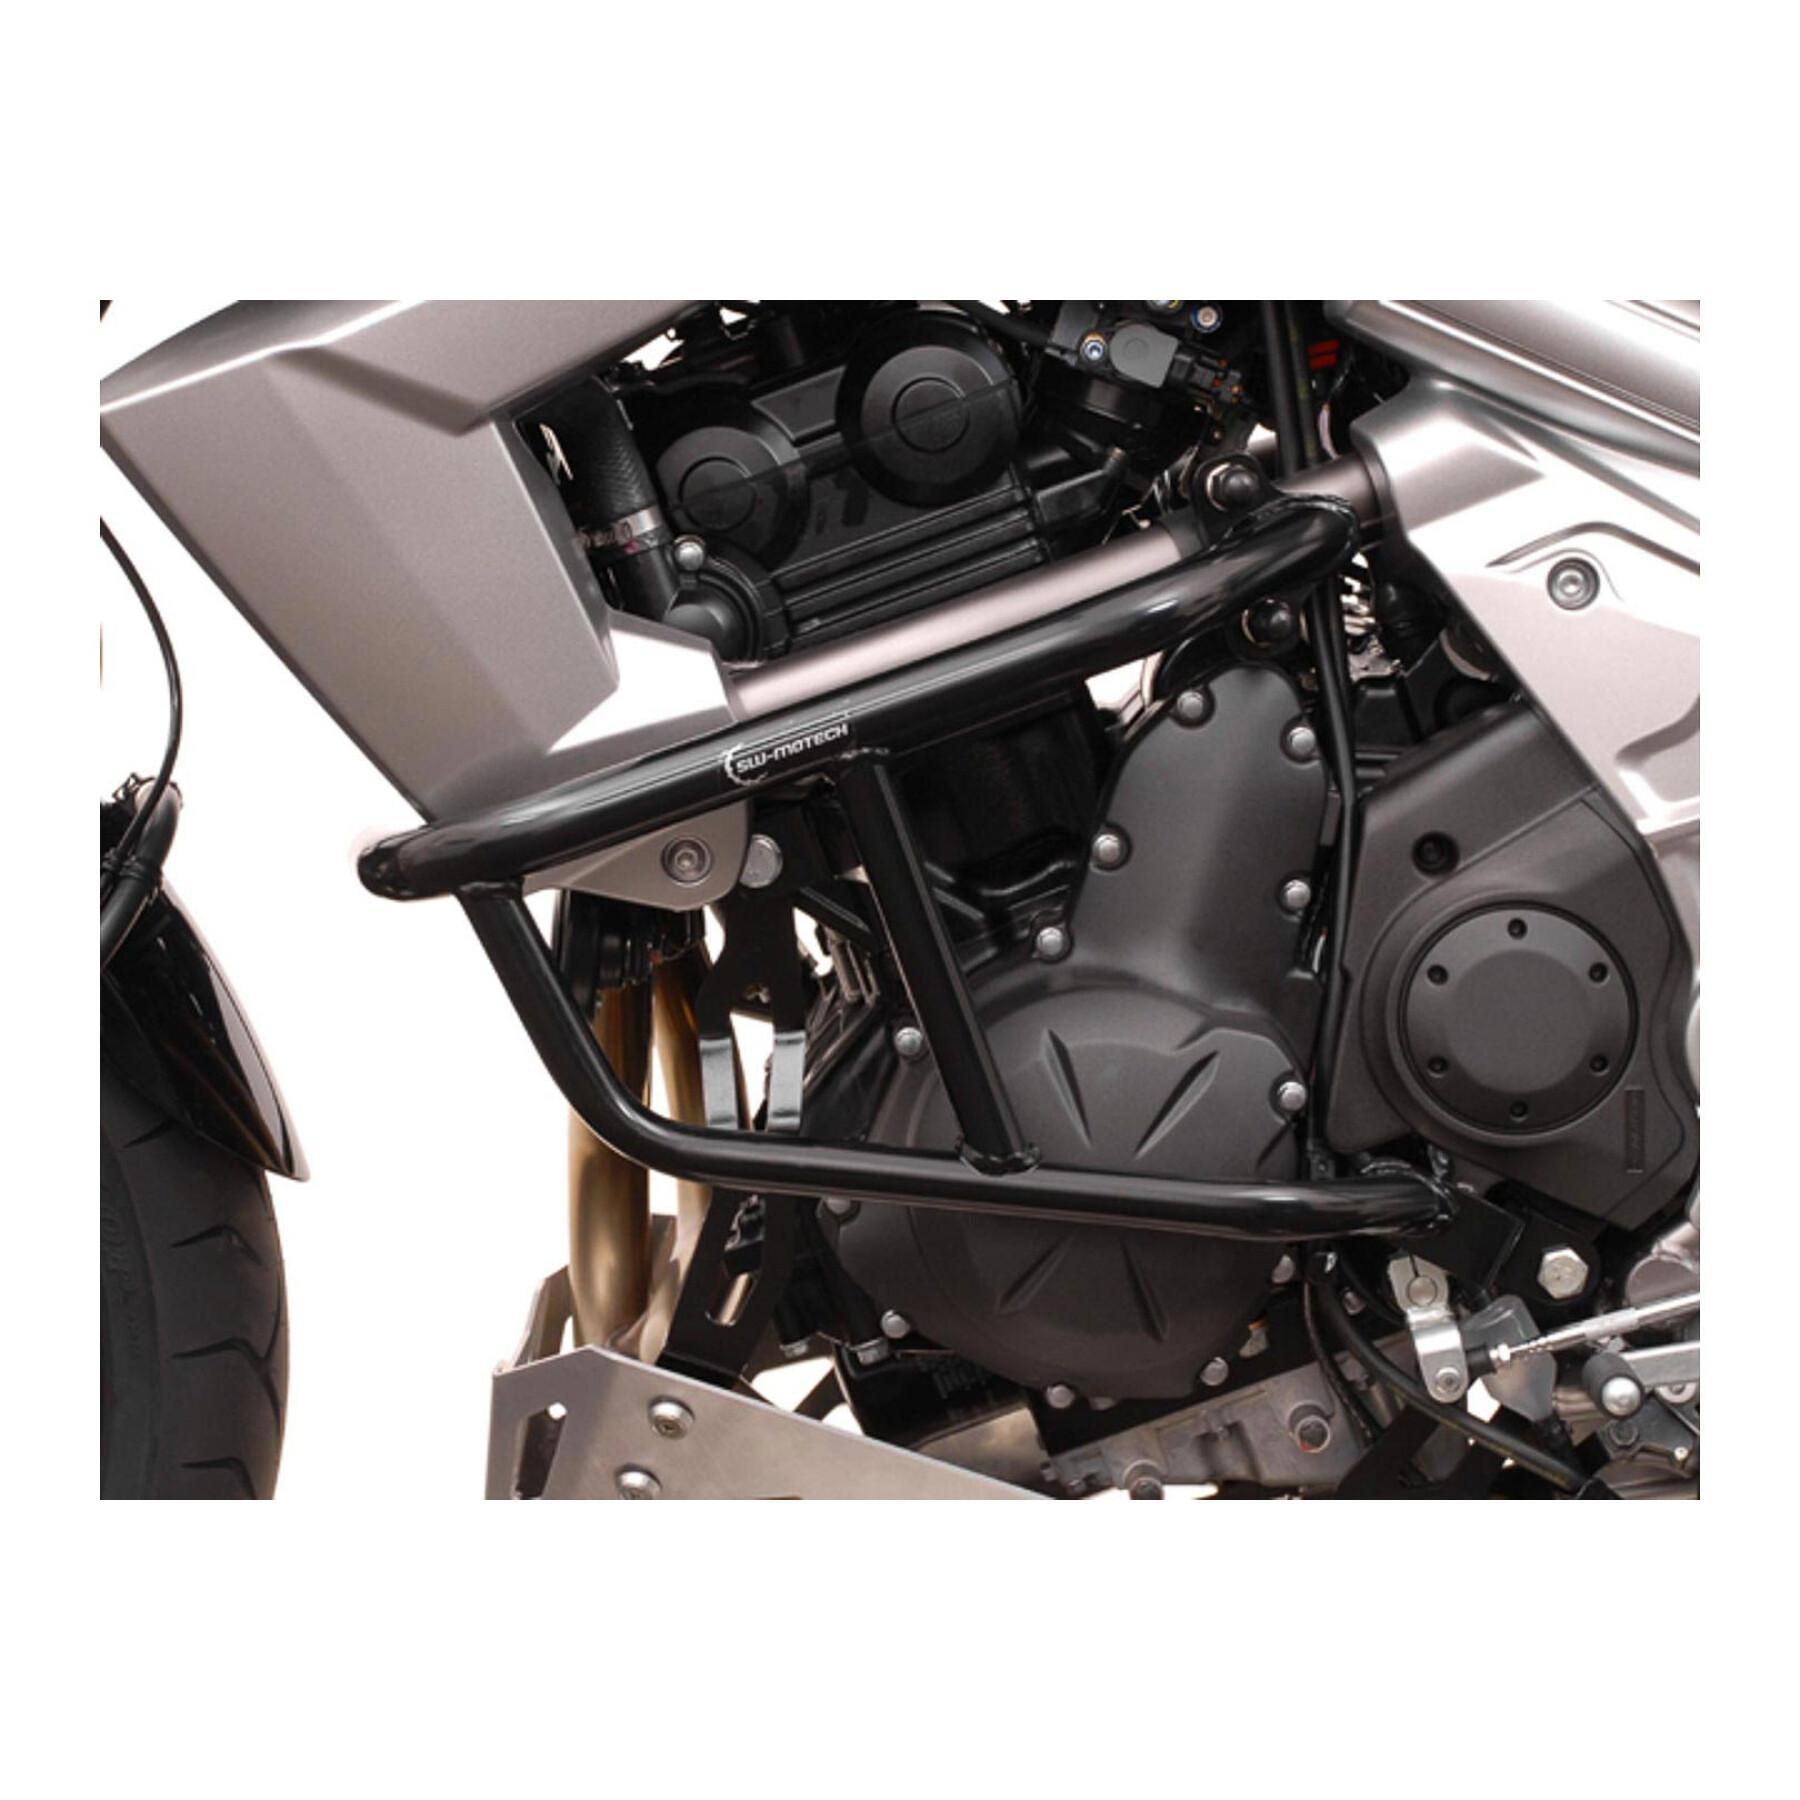 Motorrad-Standartenschutz Sw-Motech Crashbar Kawasaki Versys 650 (07-14)